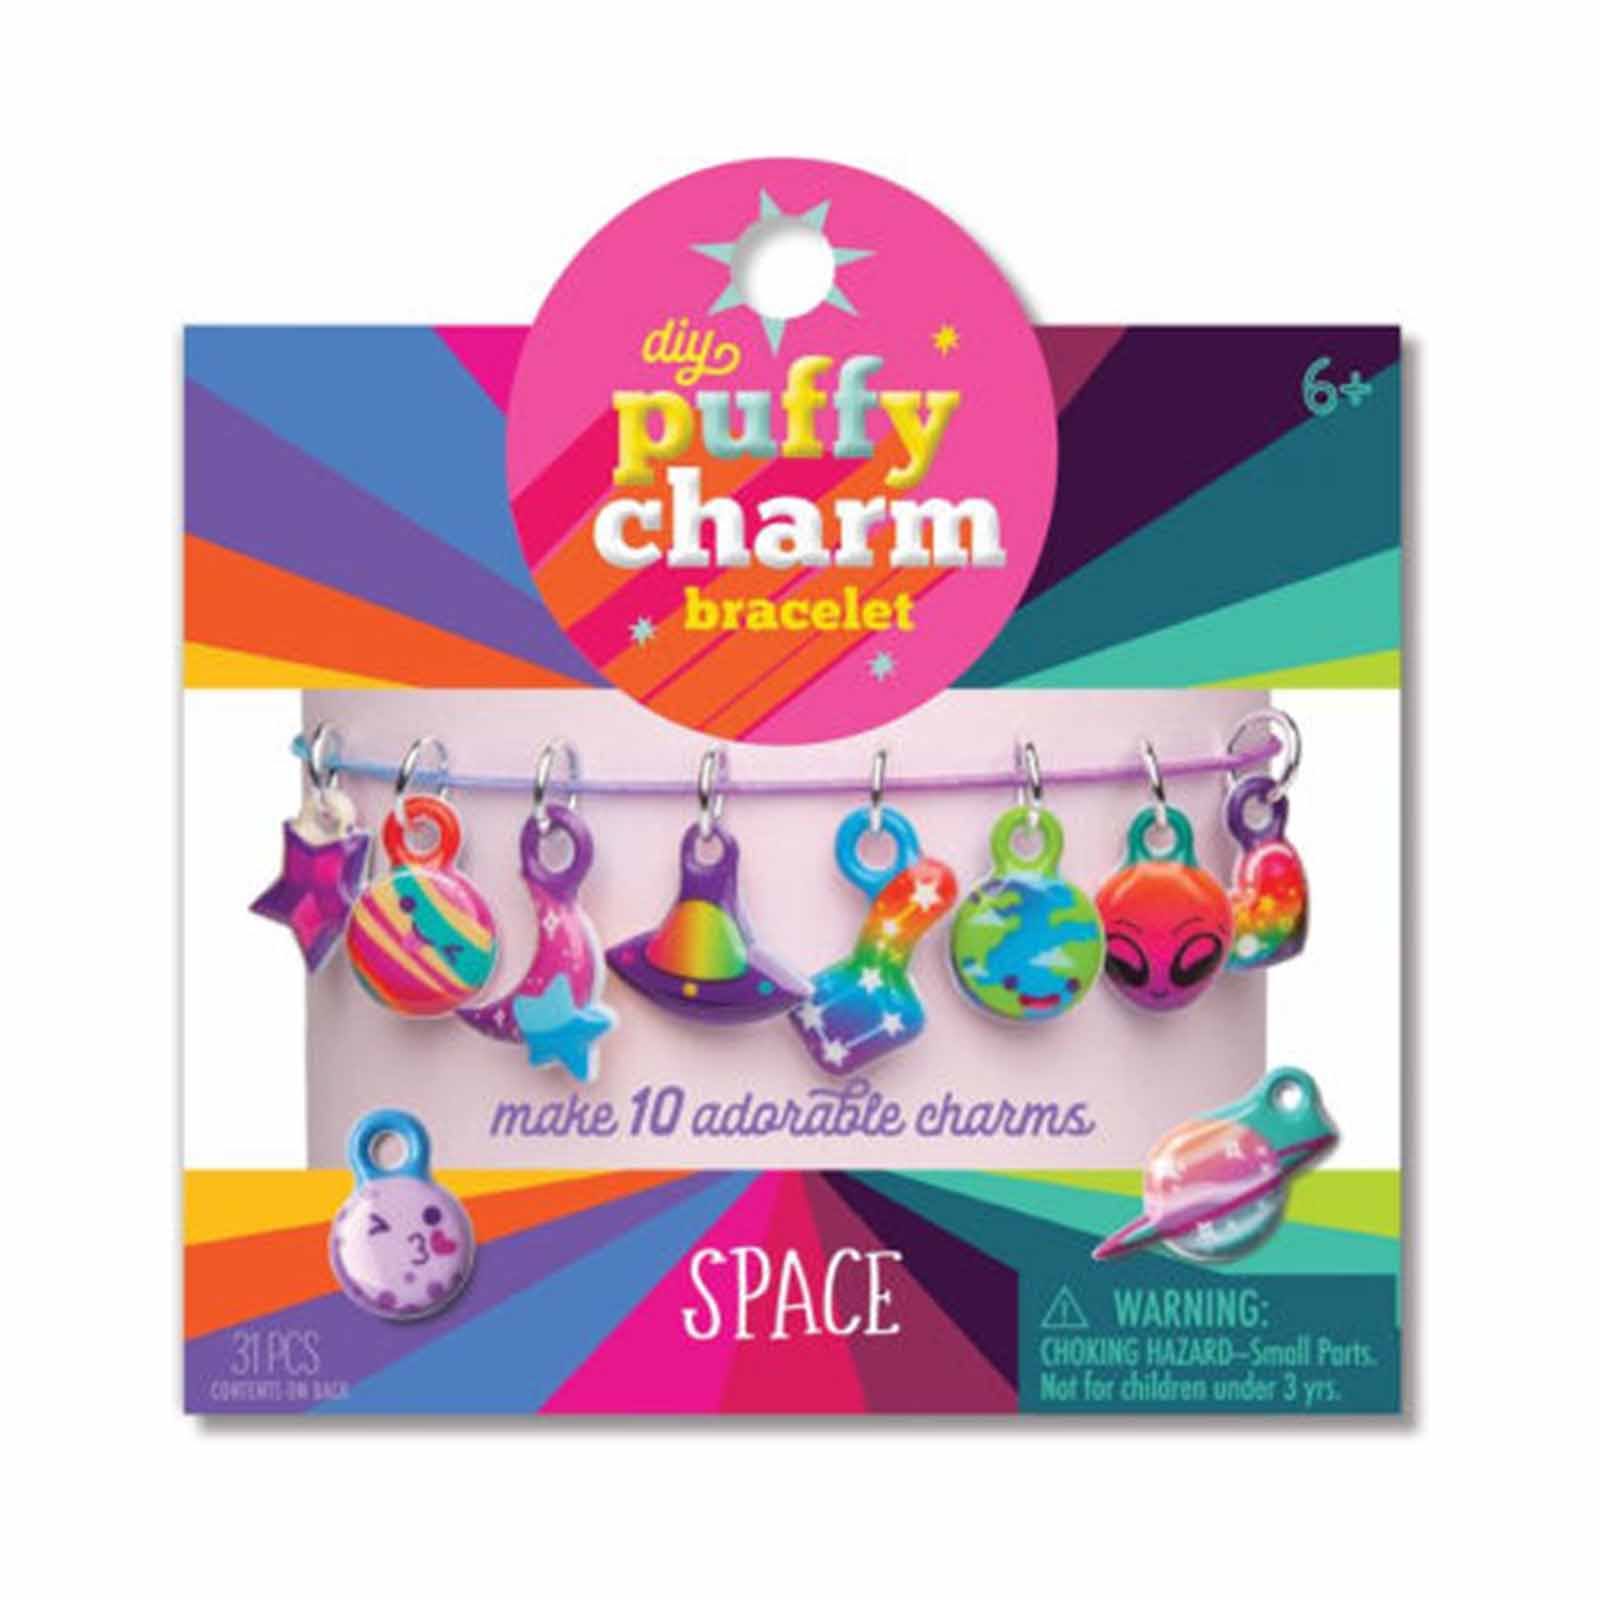 Craft-tastic DIY Puffy Charm Bracelet Space